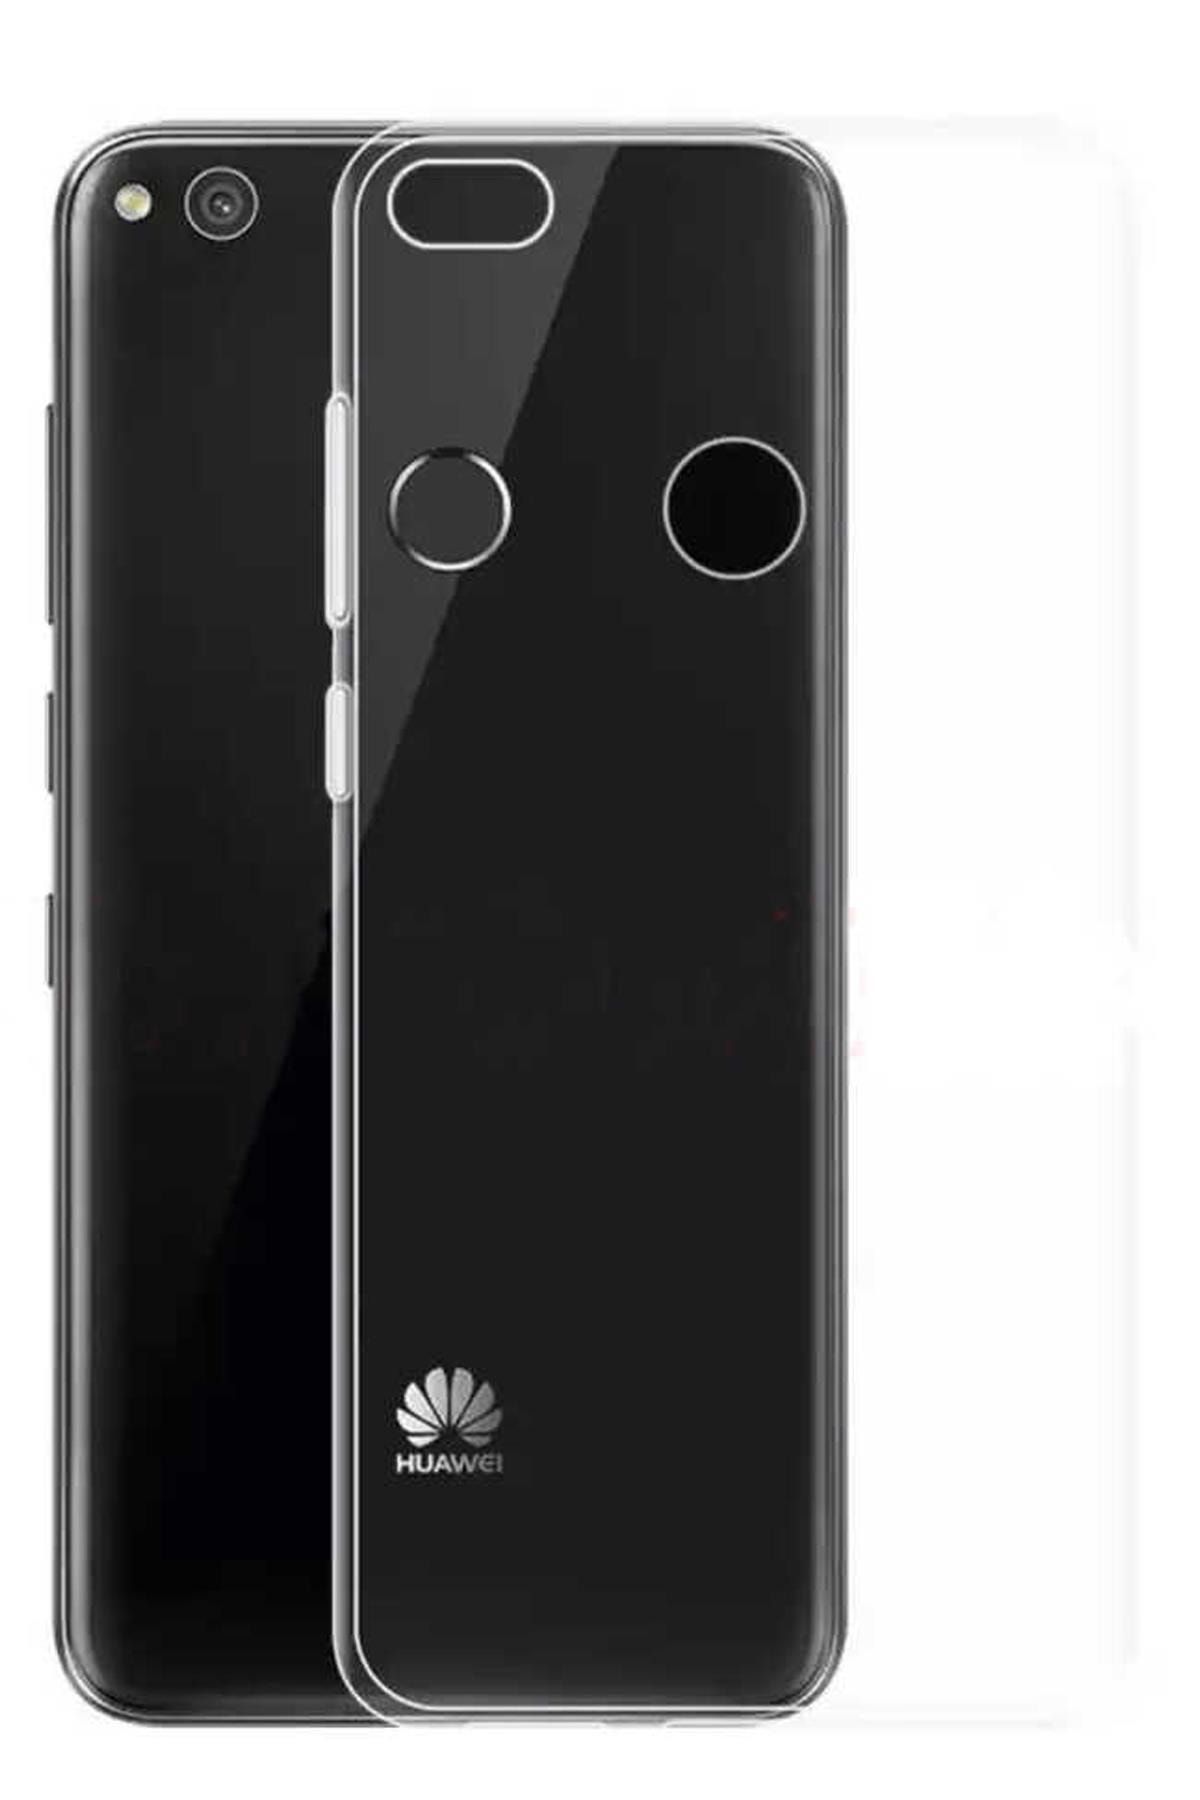 Aksesuarcım Huawei P8 Lite Kılıf Silikon Şeffaf Koruma Süper